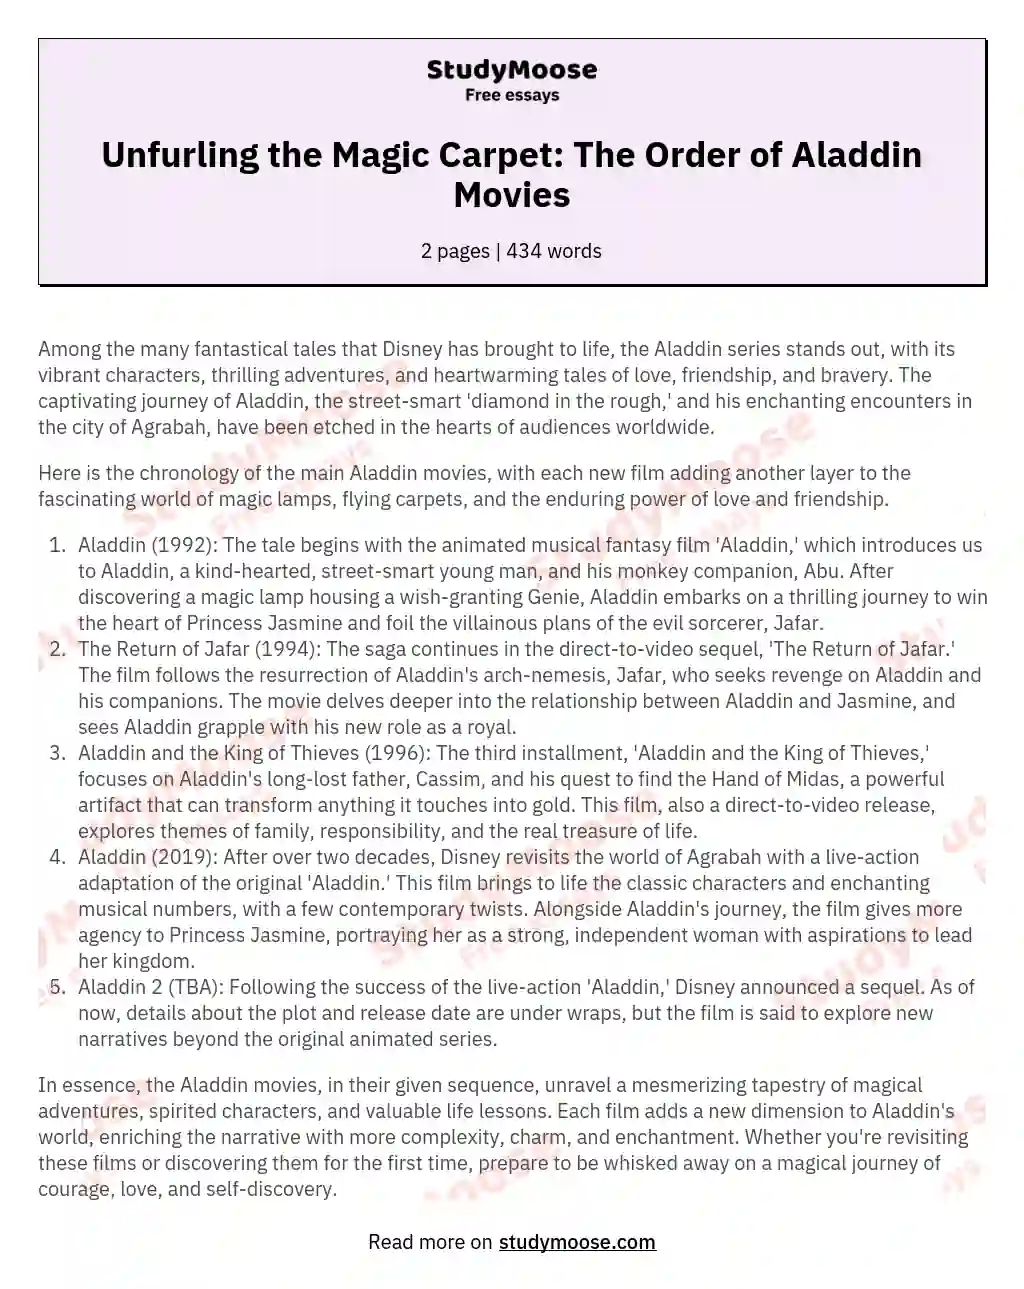 Unfurling the Magic Carpet: The Order of Aladdin Movies essay